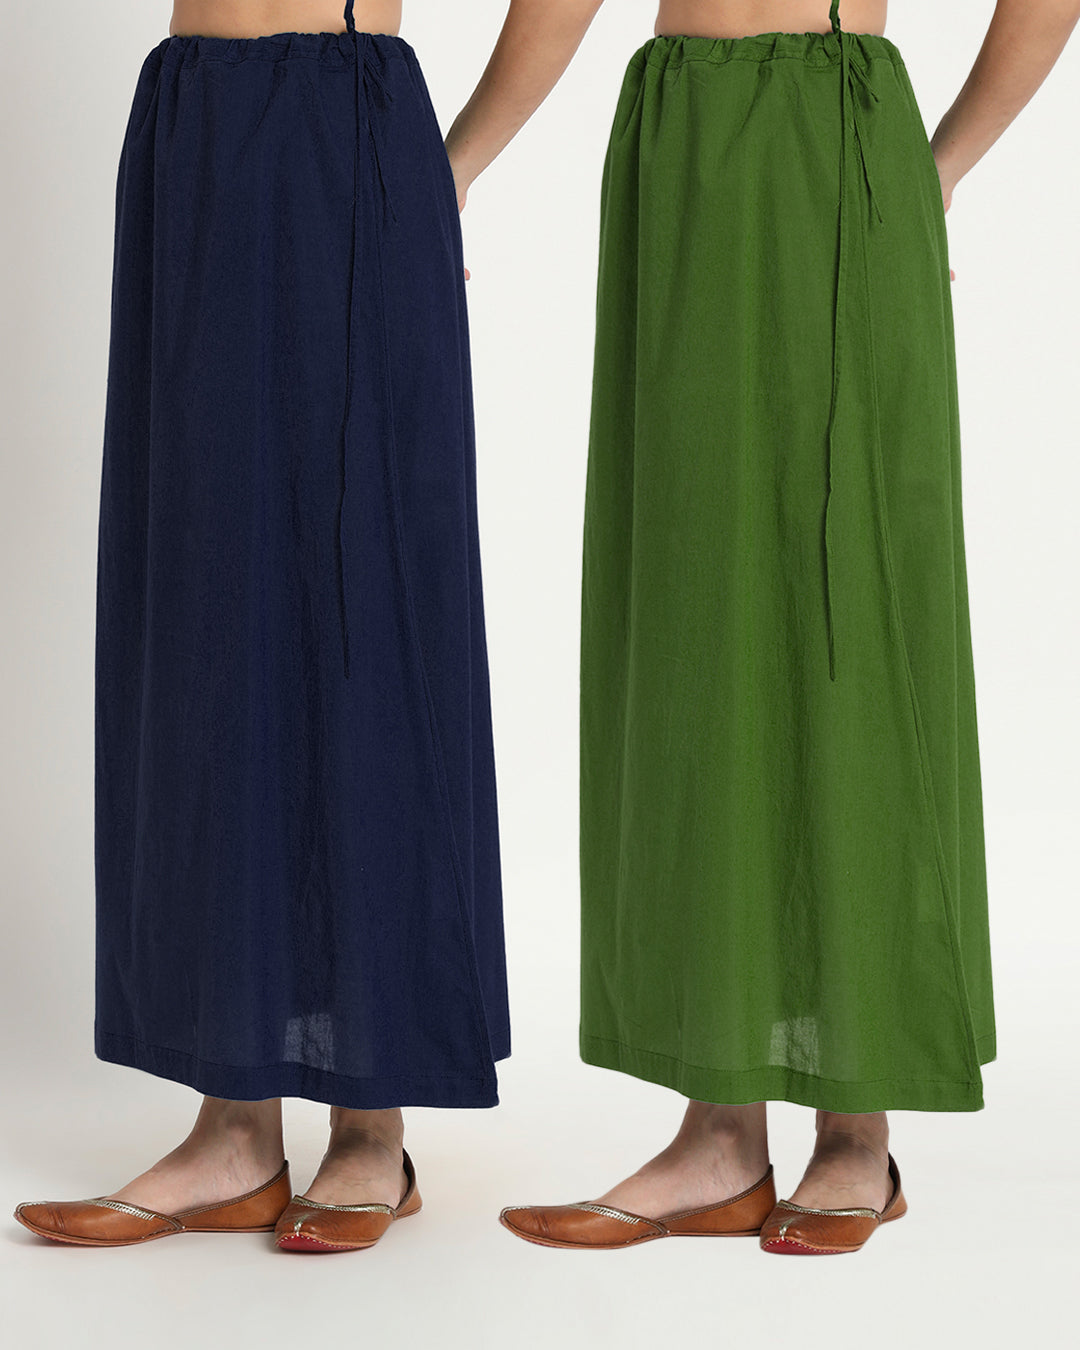 Combo: Midnight Blue & Greening Spring Peekaboo Petticoat- Set of 2